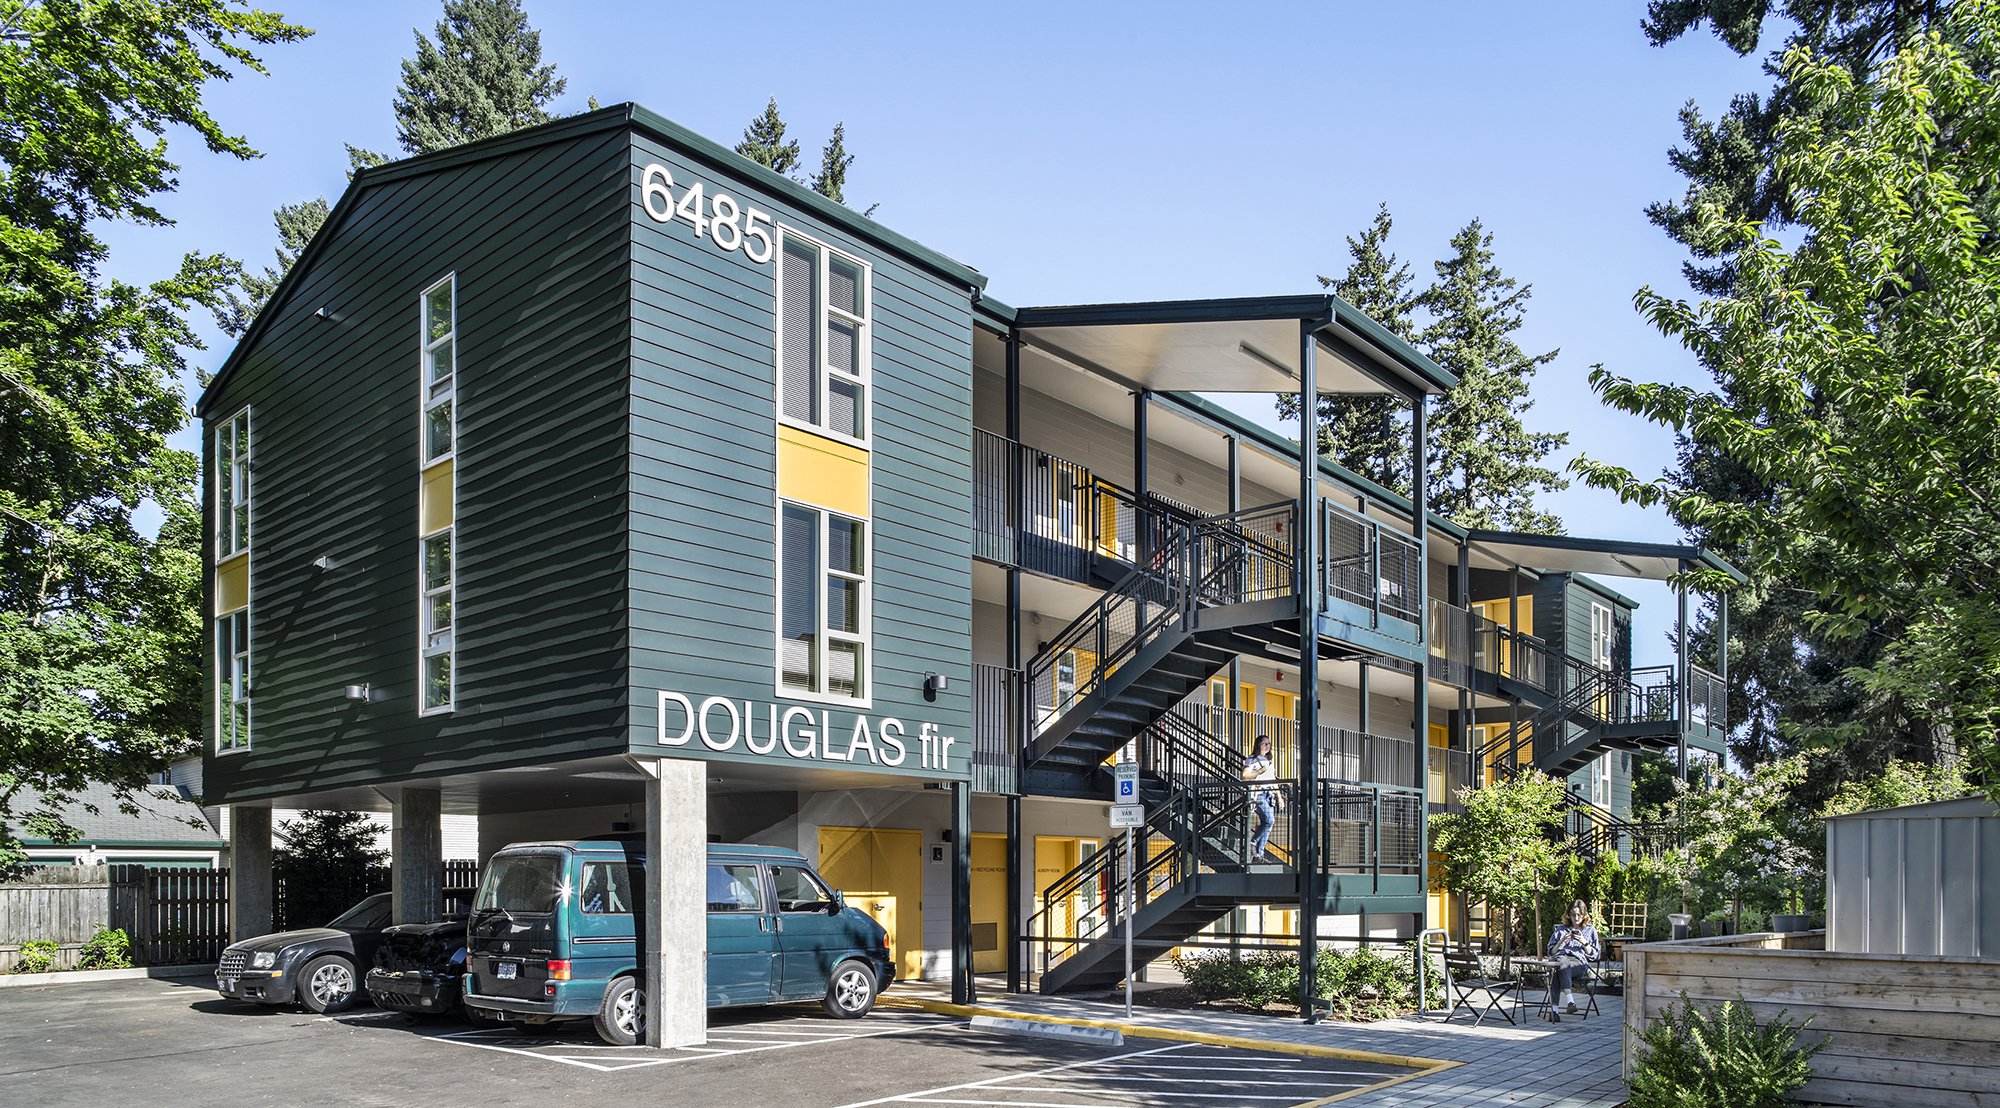 Douglas Fir Apartments - exterior - courtesy Pete Eckert (6) - web.jpg